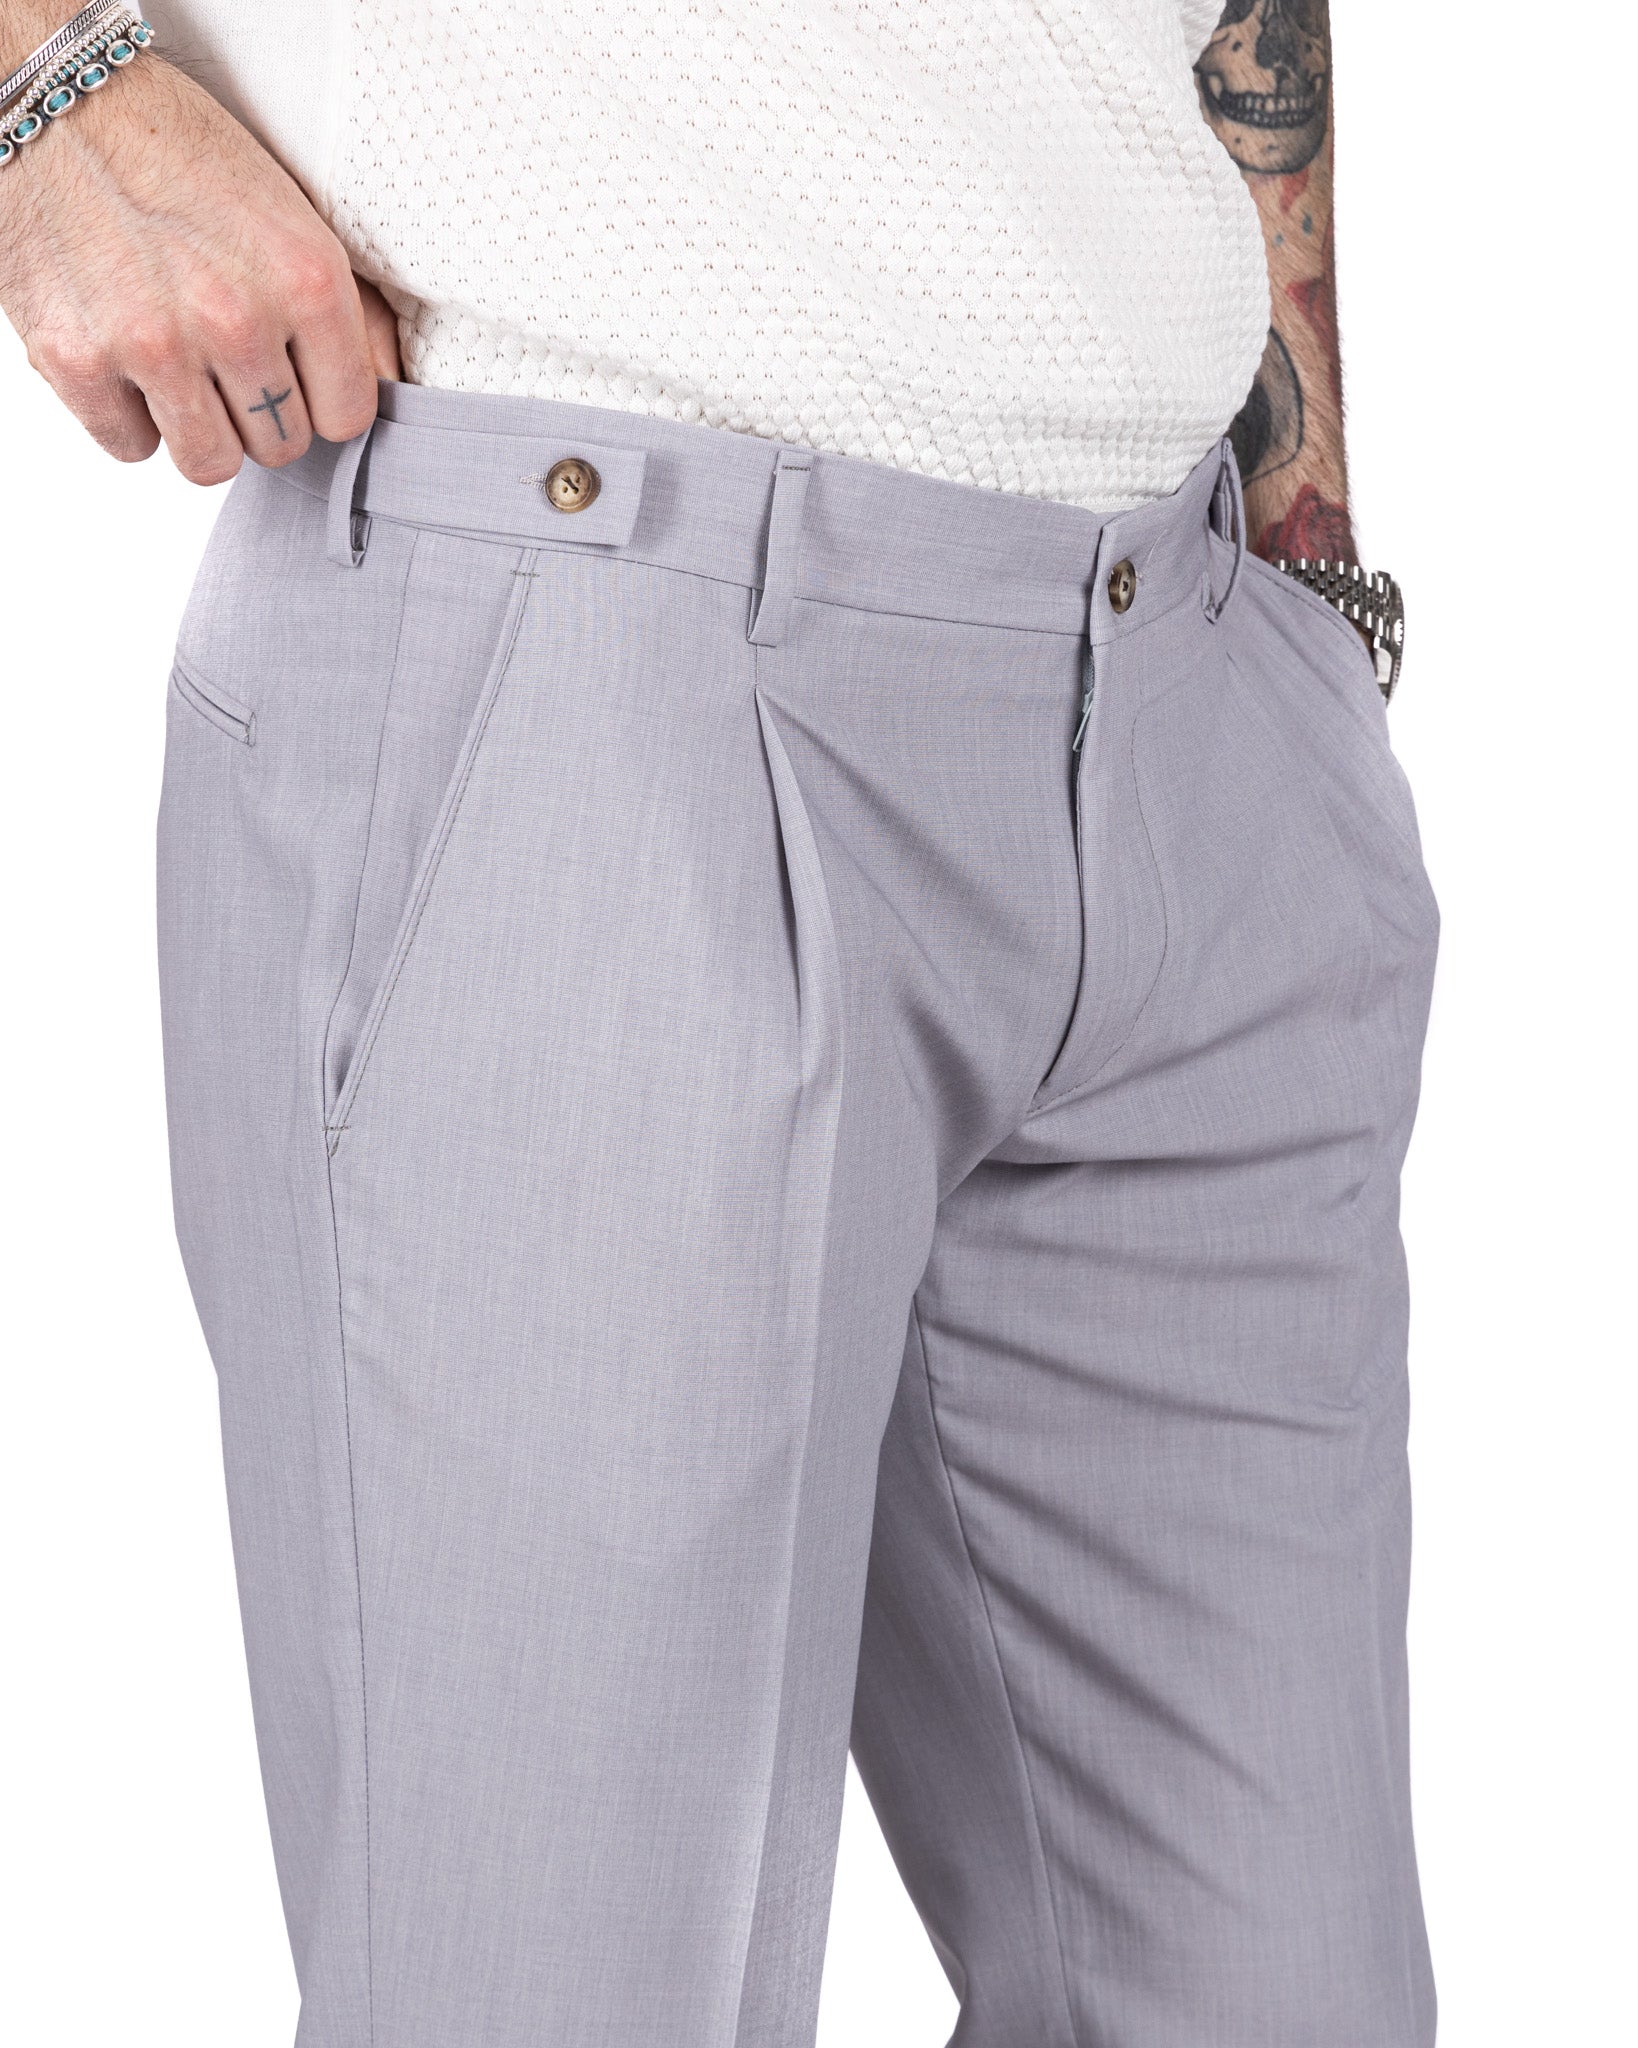 Milano - light gray basic trousers